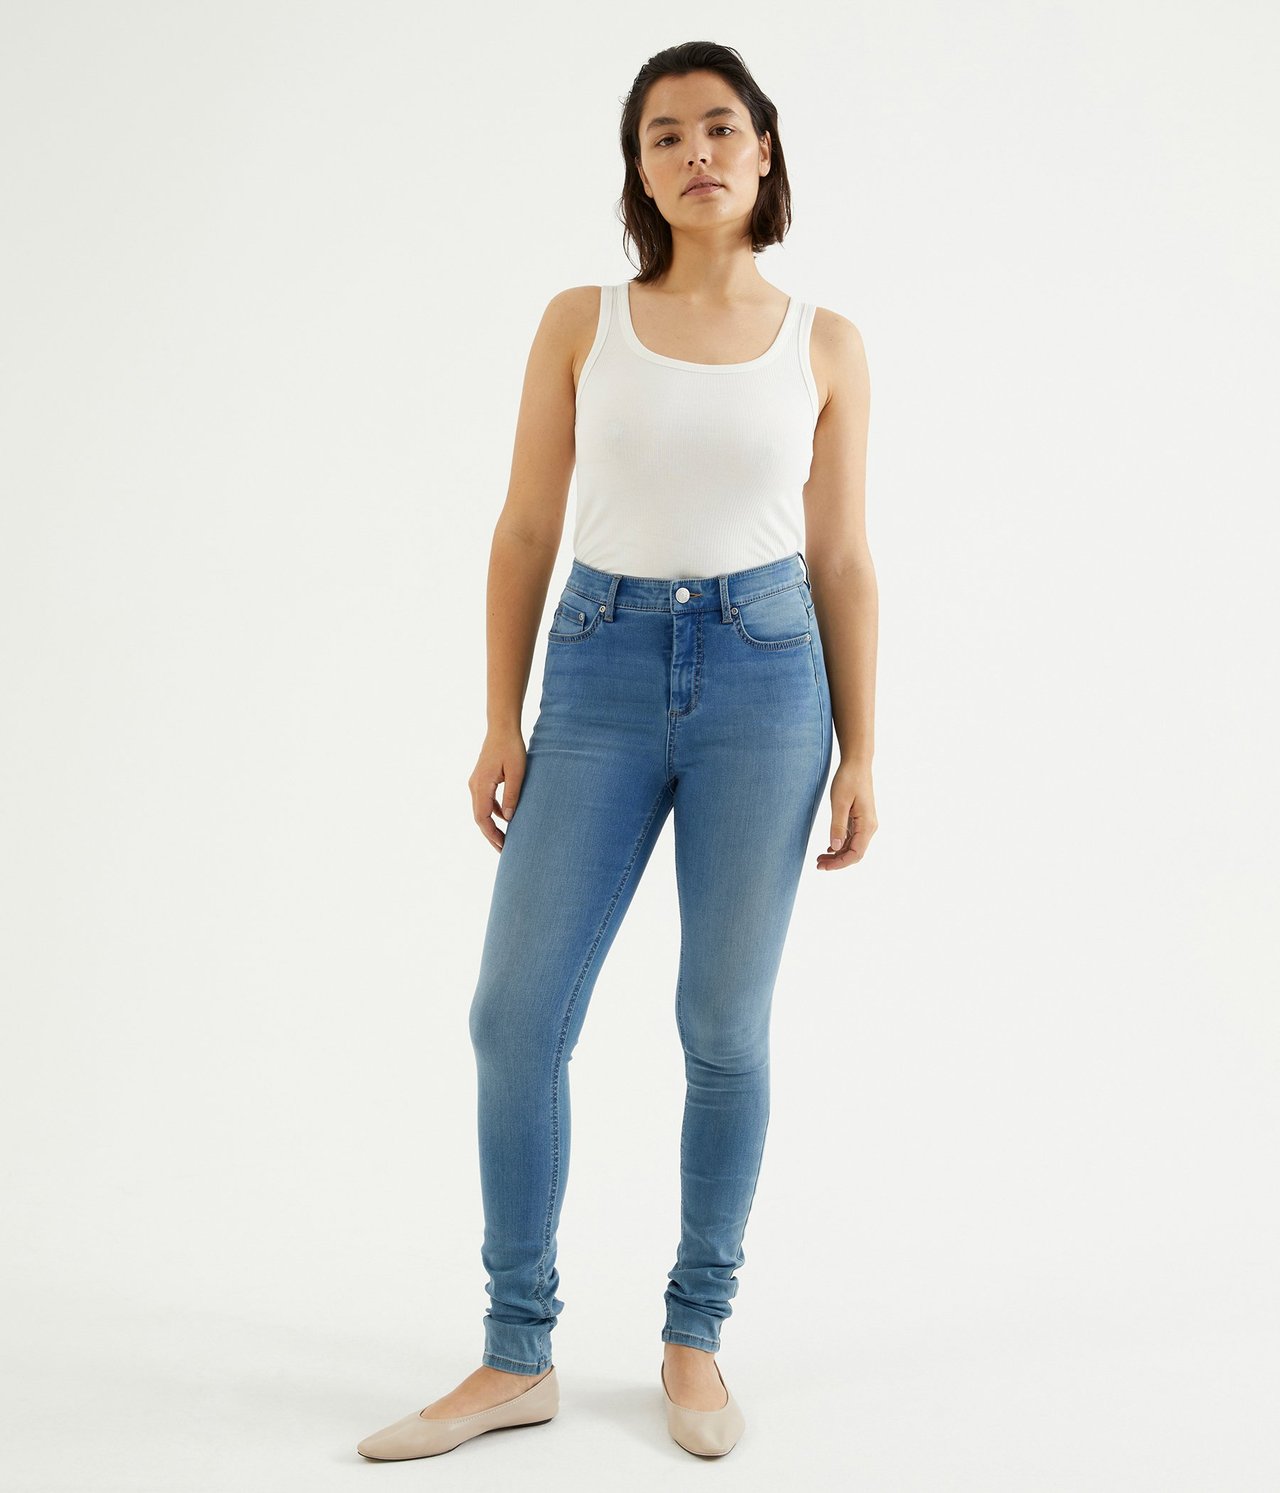 Super slim jeans extra long leg - Denimi - 1